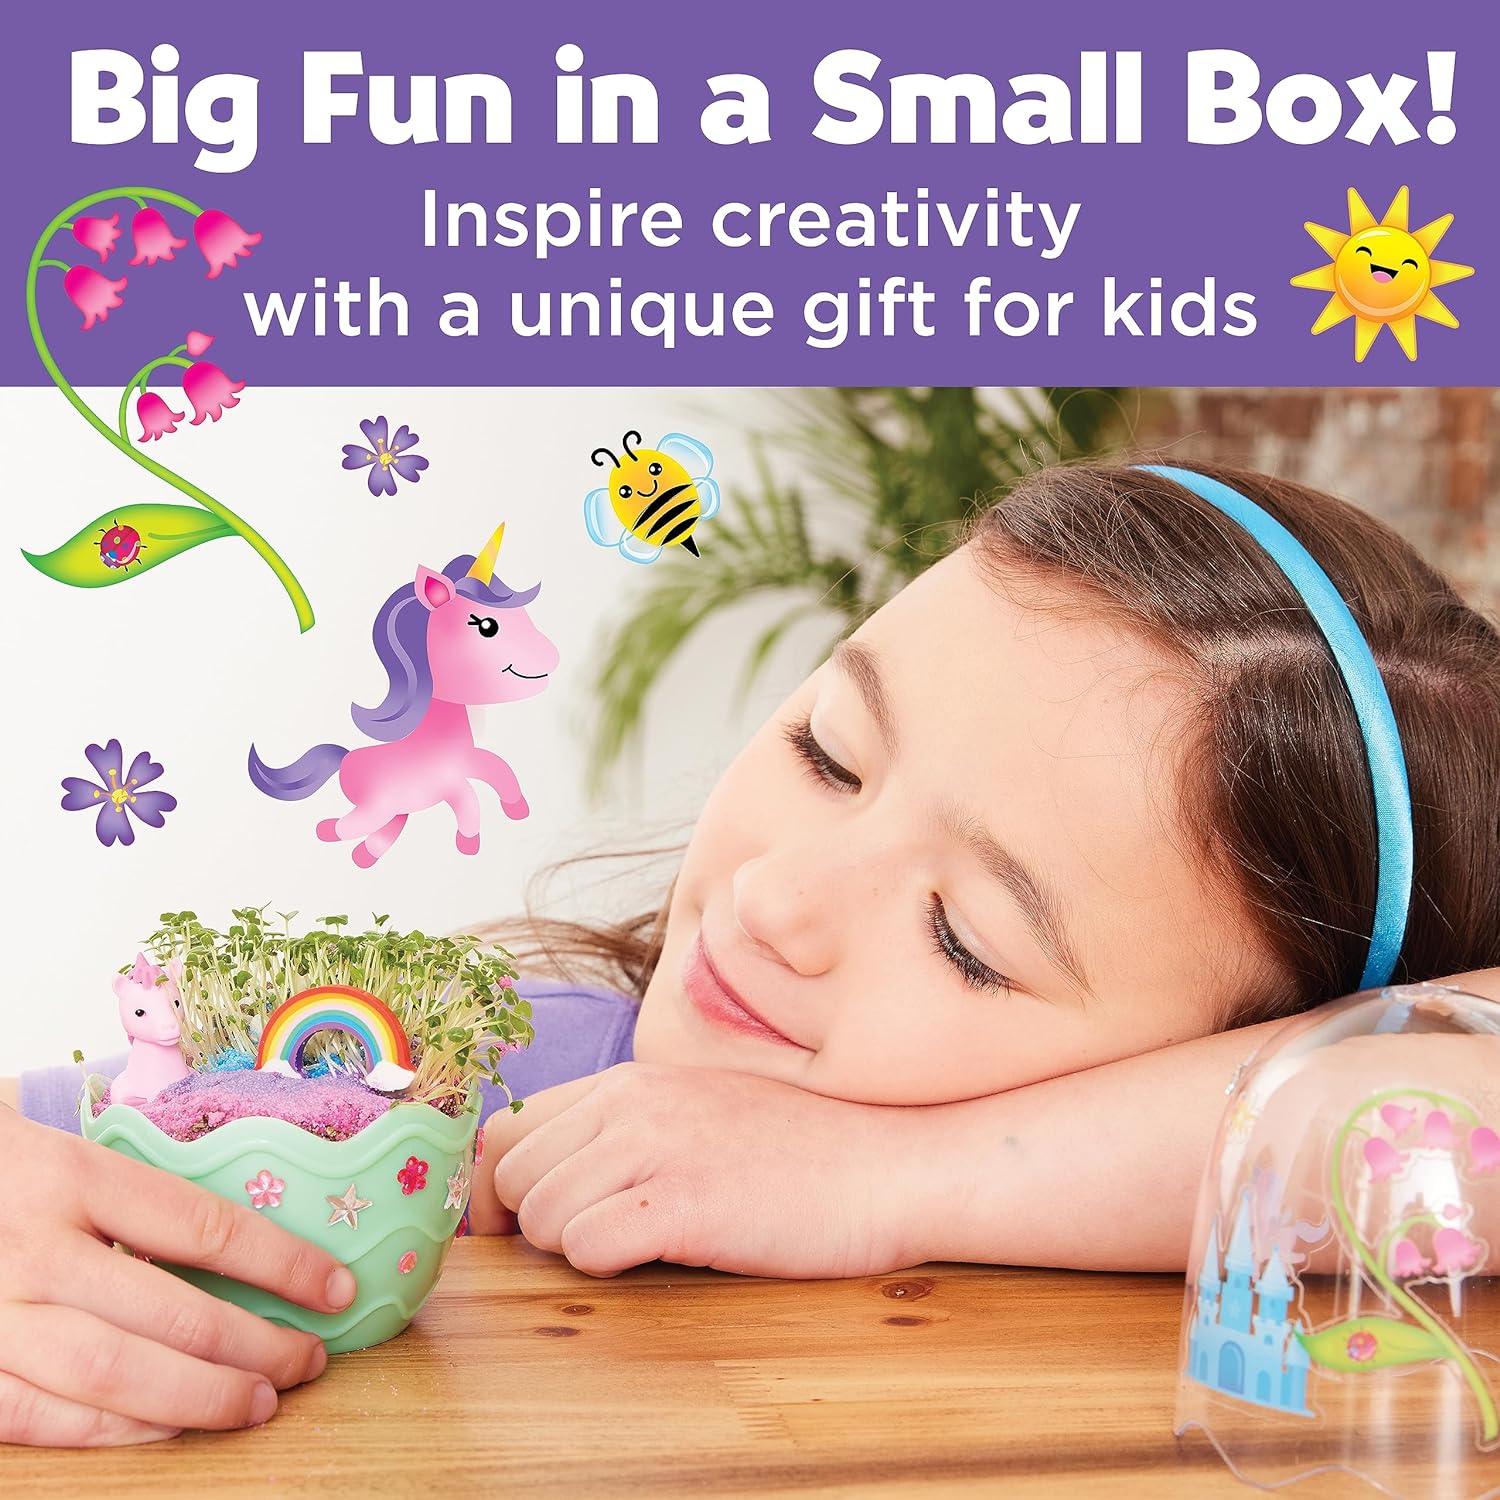 Creativity for Kids Mini Garden: Magical Unicorn Terrarium Kit - Unicorn Gifts for Girls, Kids Crafts and Unicorn Toys Ages 6-8+,Unique Gifts for Kids